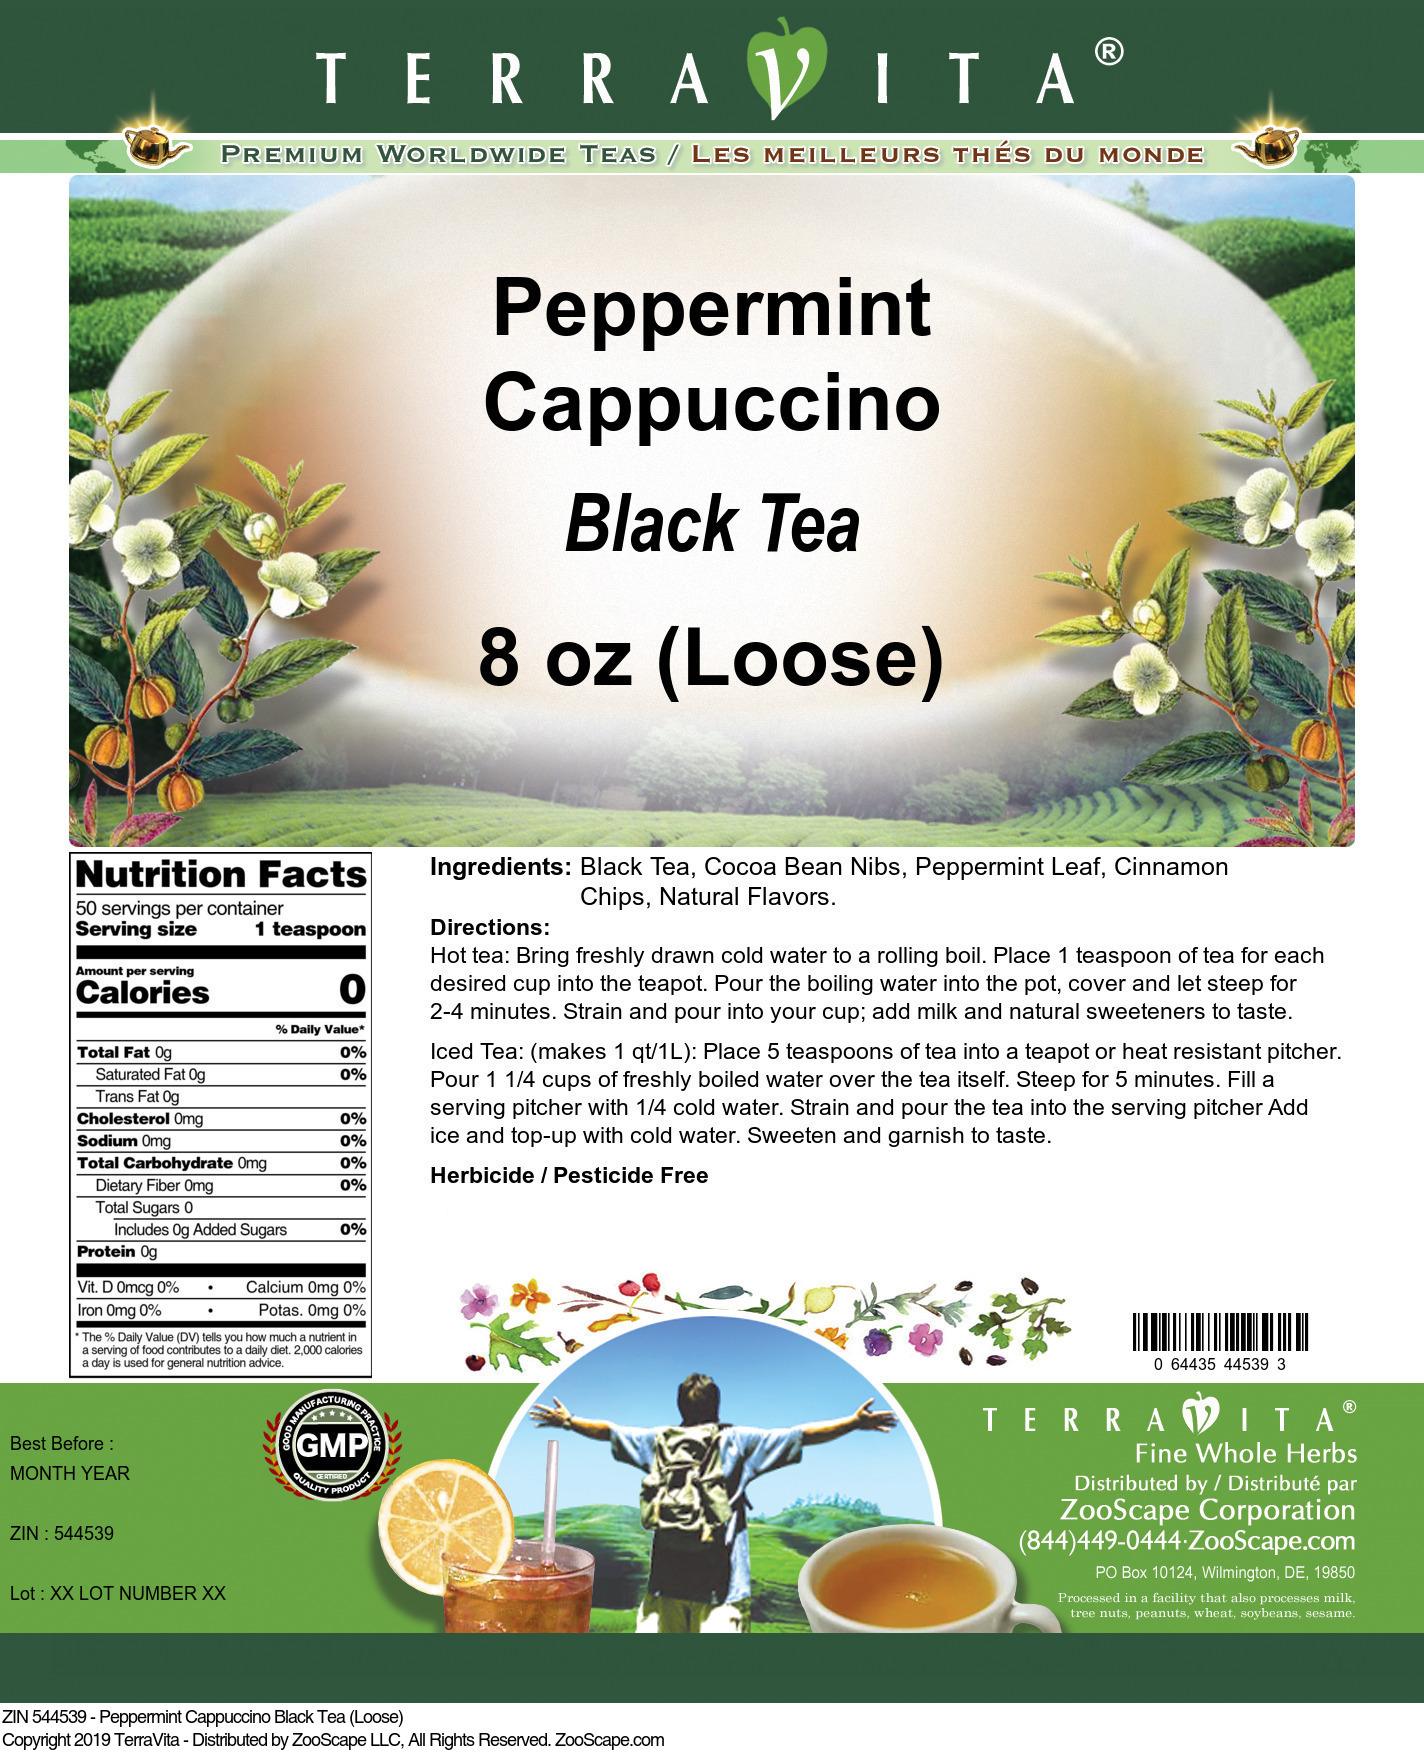 Peppermint Cappuccino Black Tea (Loose) - Label